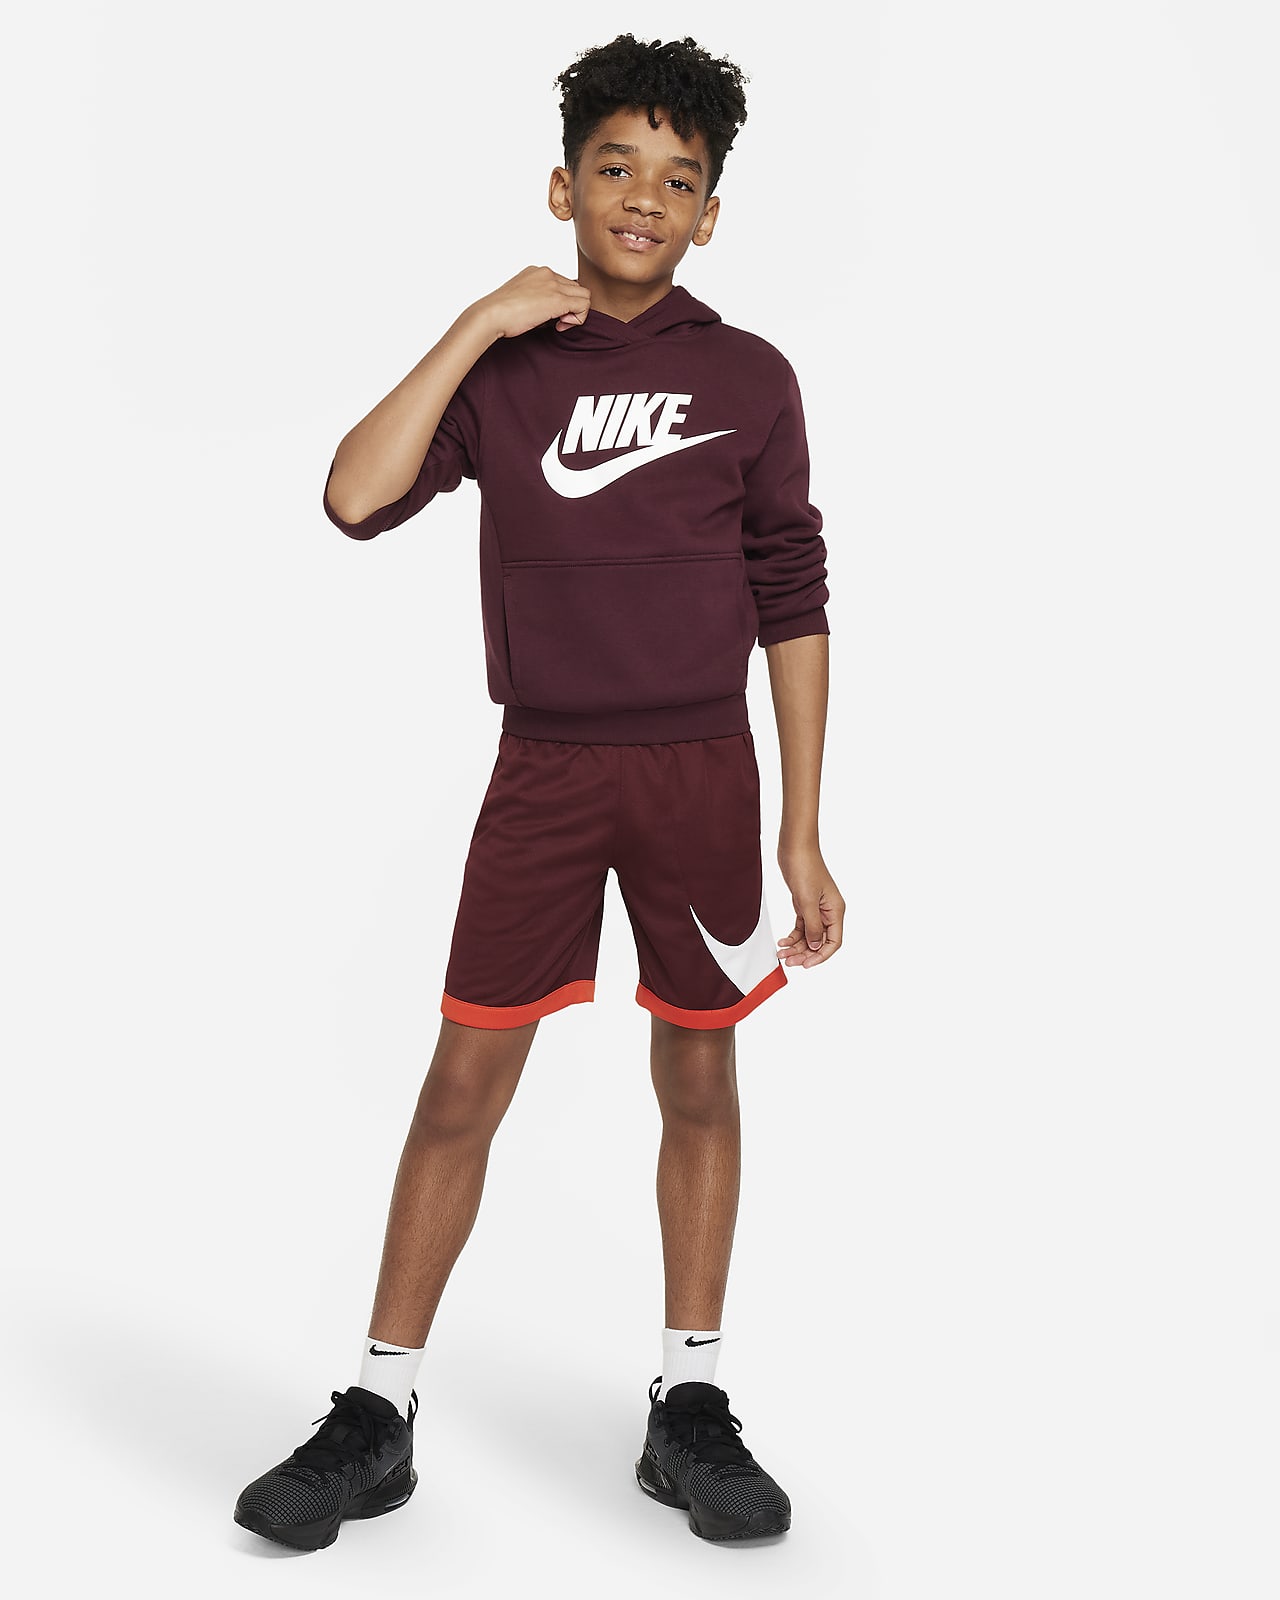 Boys Basketball & Athletic Shorts